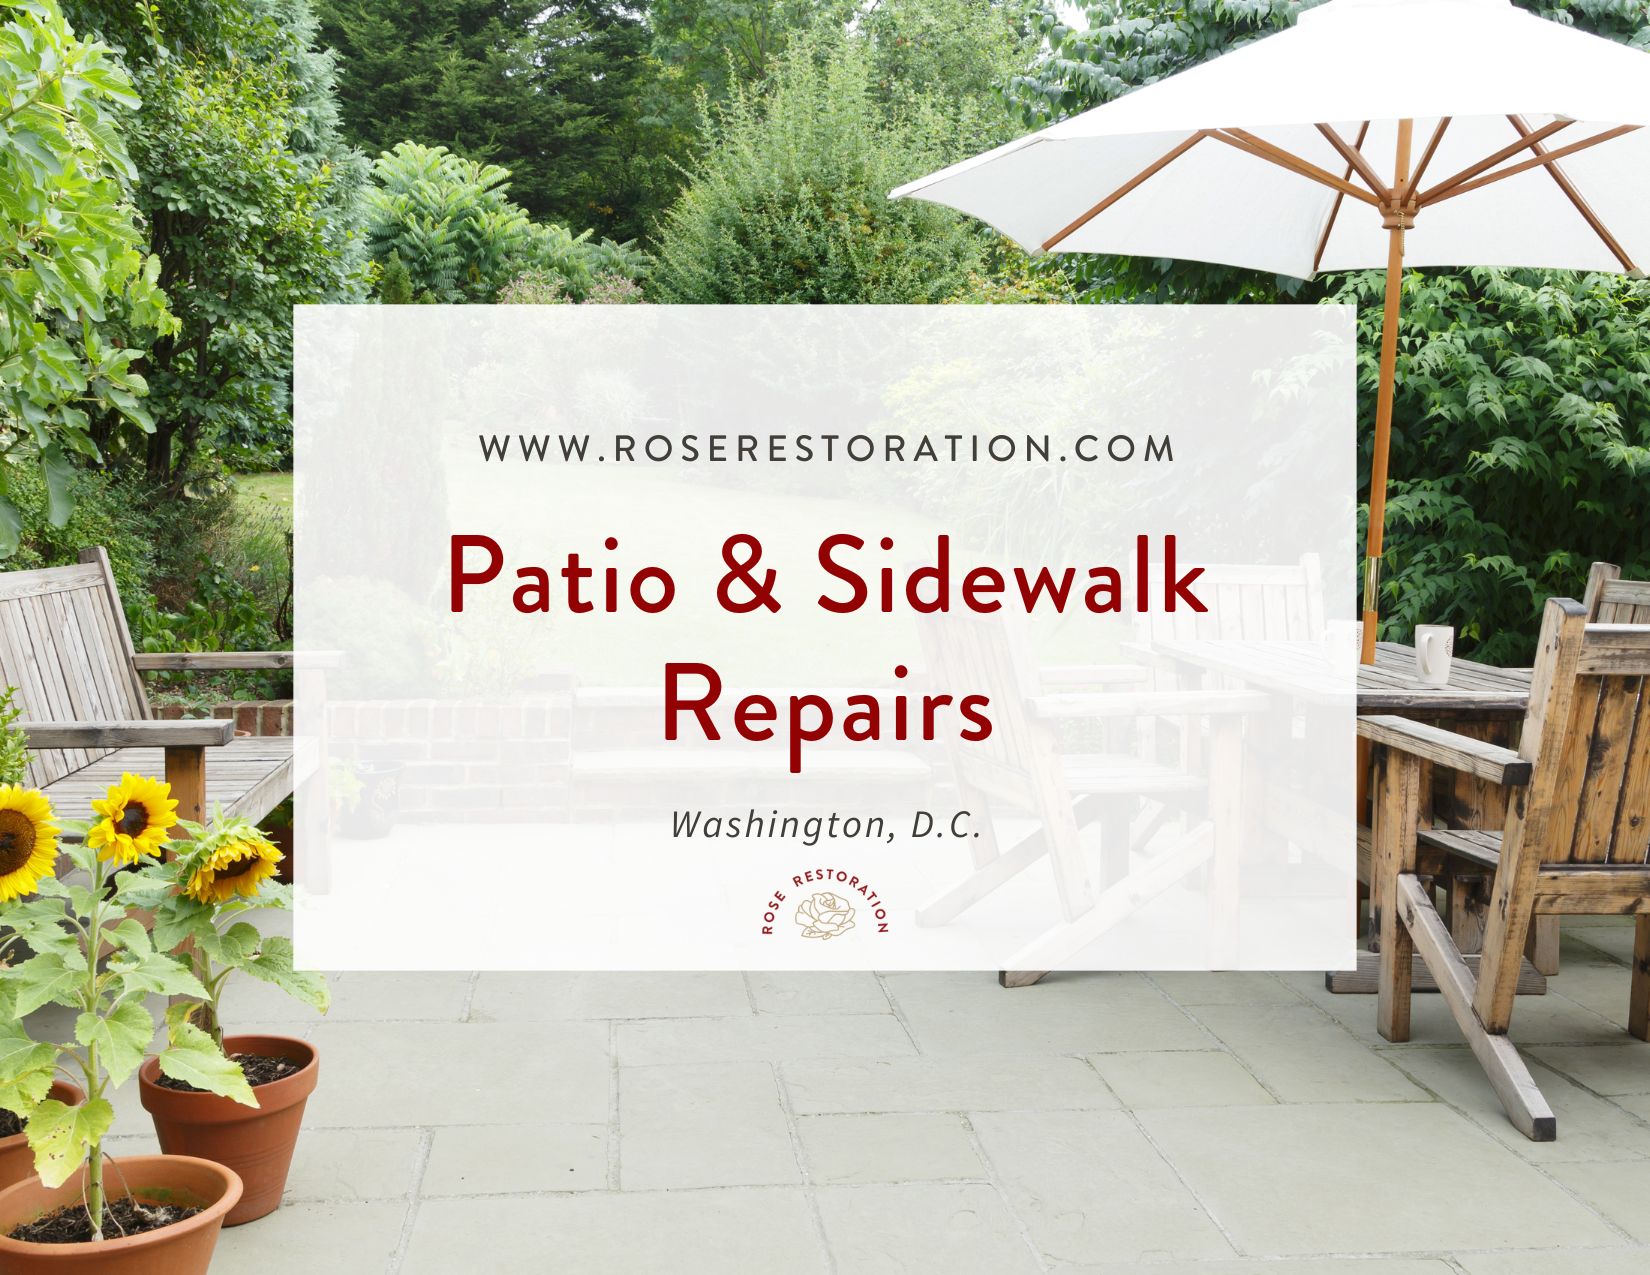 Patio & Sidewalk Repairs. Rose Restoration.